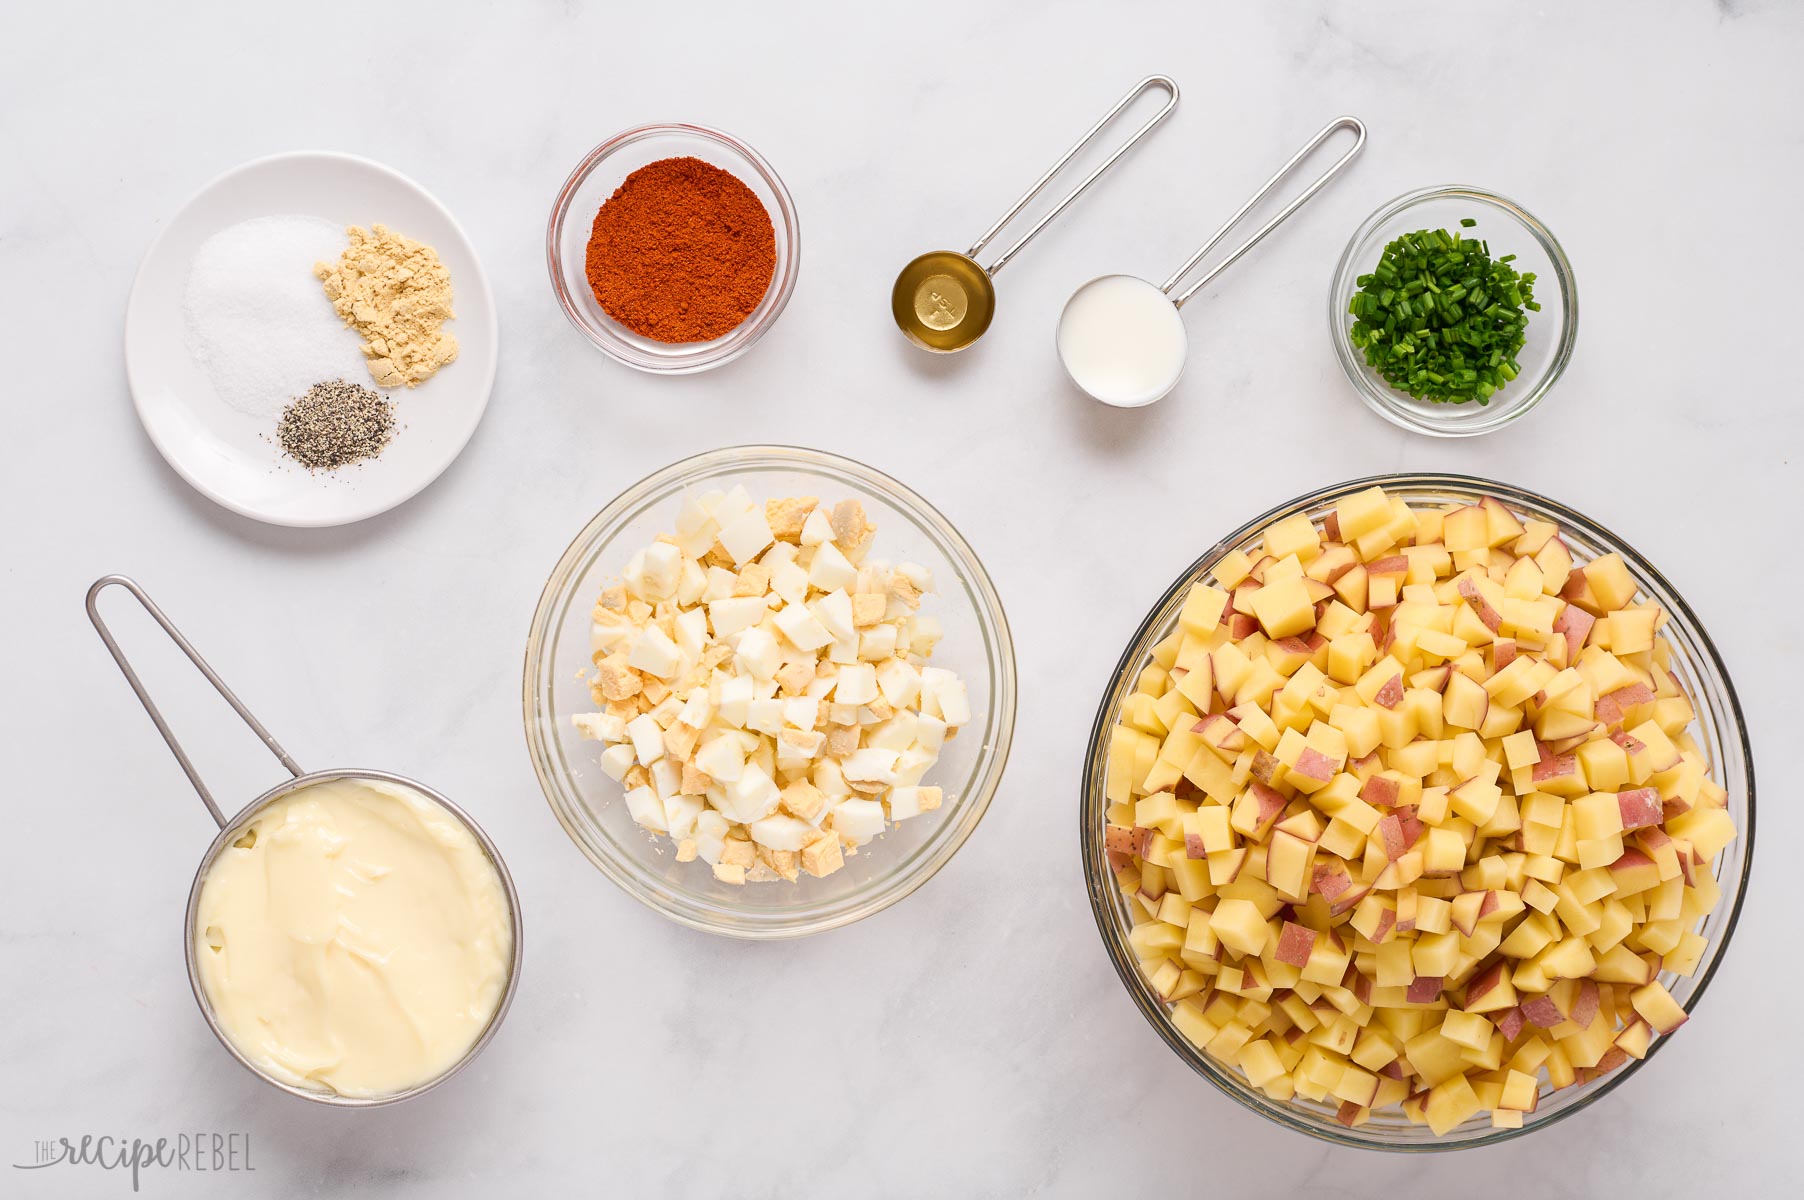 ingredients needed for potato salad